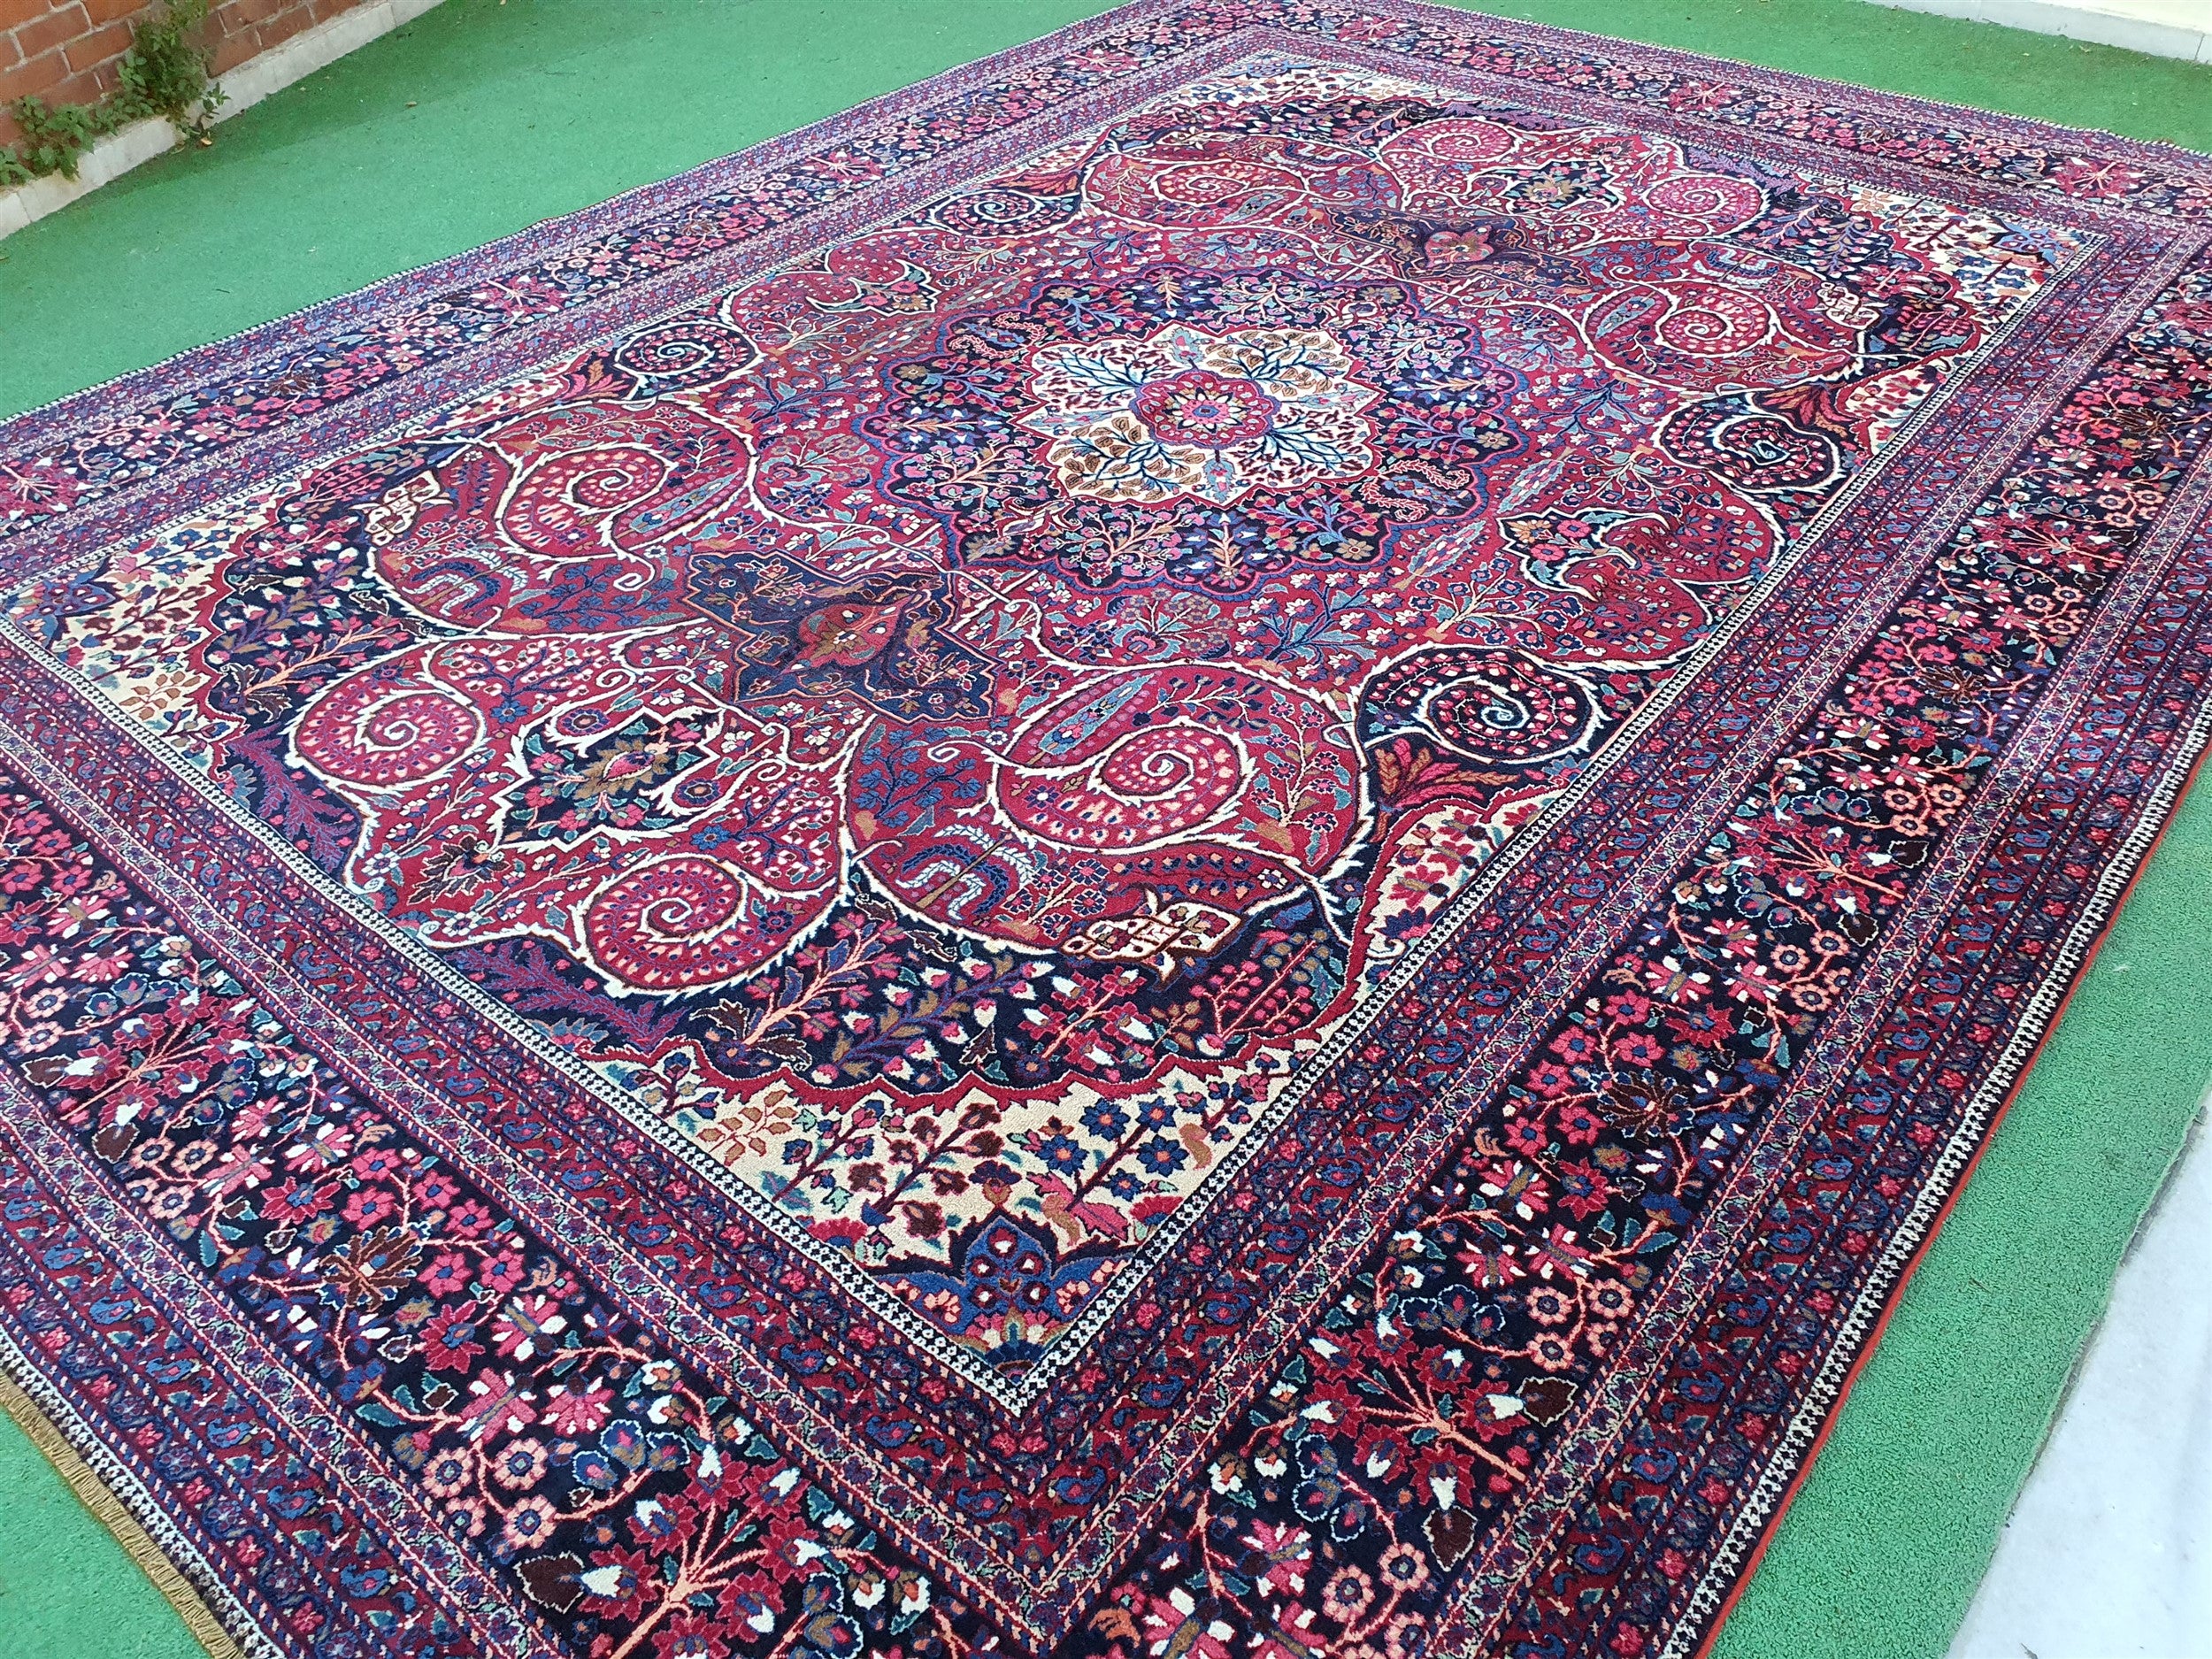 Antique Persian Rug 13 x 10 ft Blue Red Large Floral Medallion Living Dining Room Rug